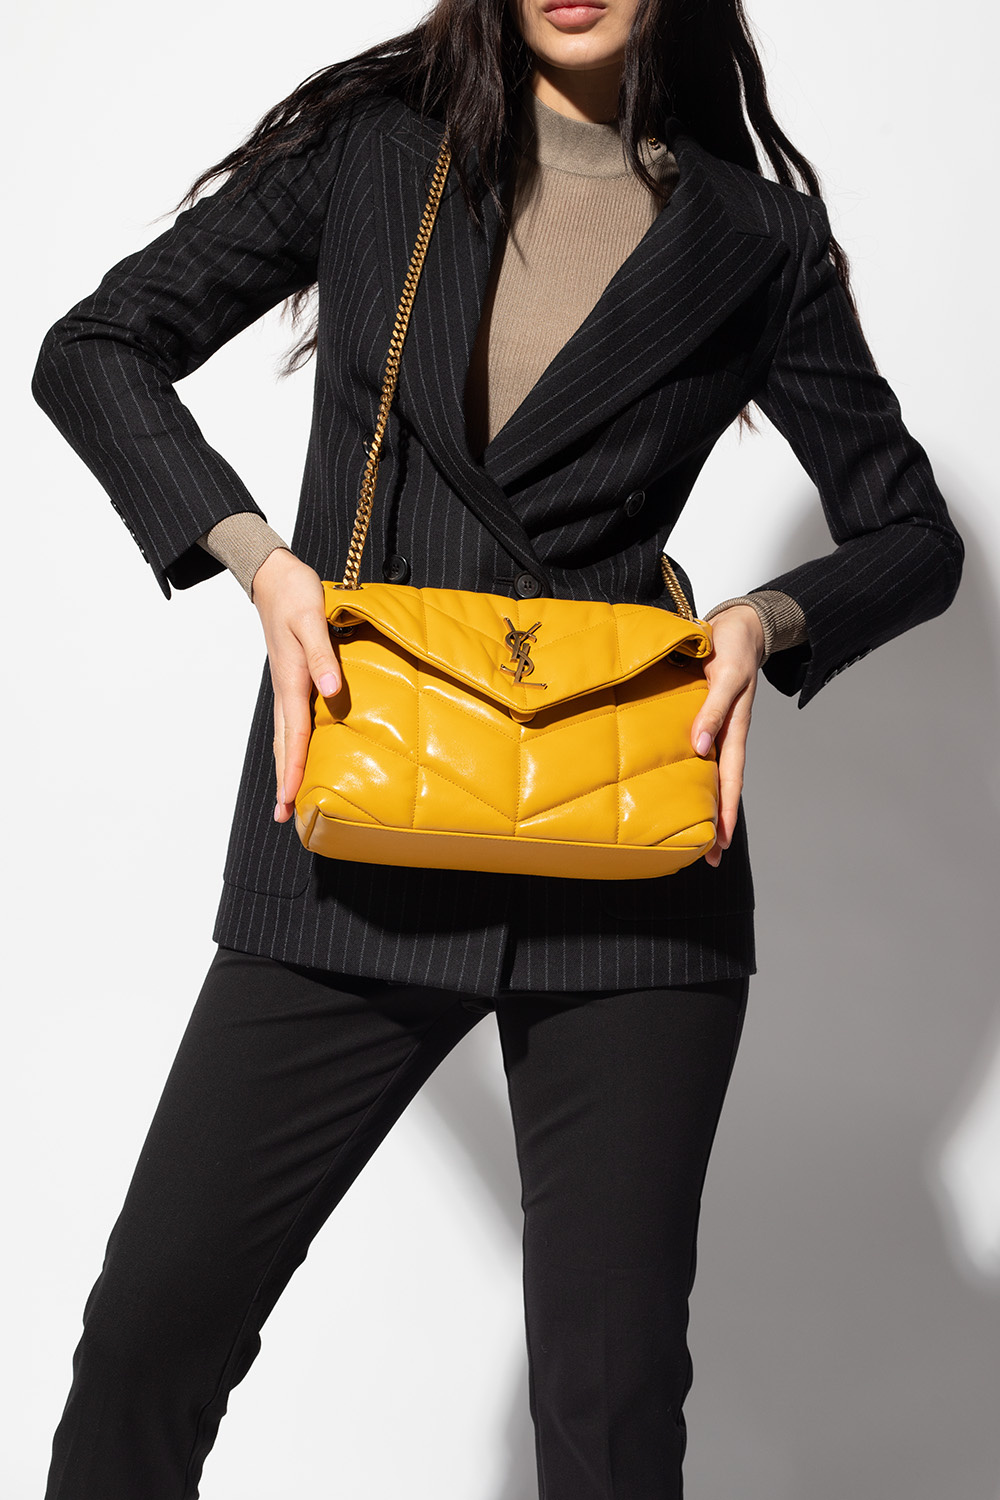 Saint Laurent 'Puffer Small' shoulder bag, Women's Bags